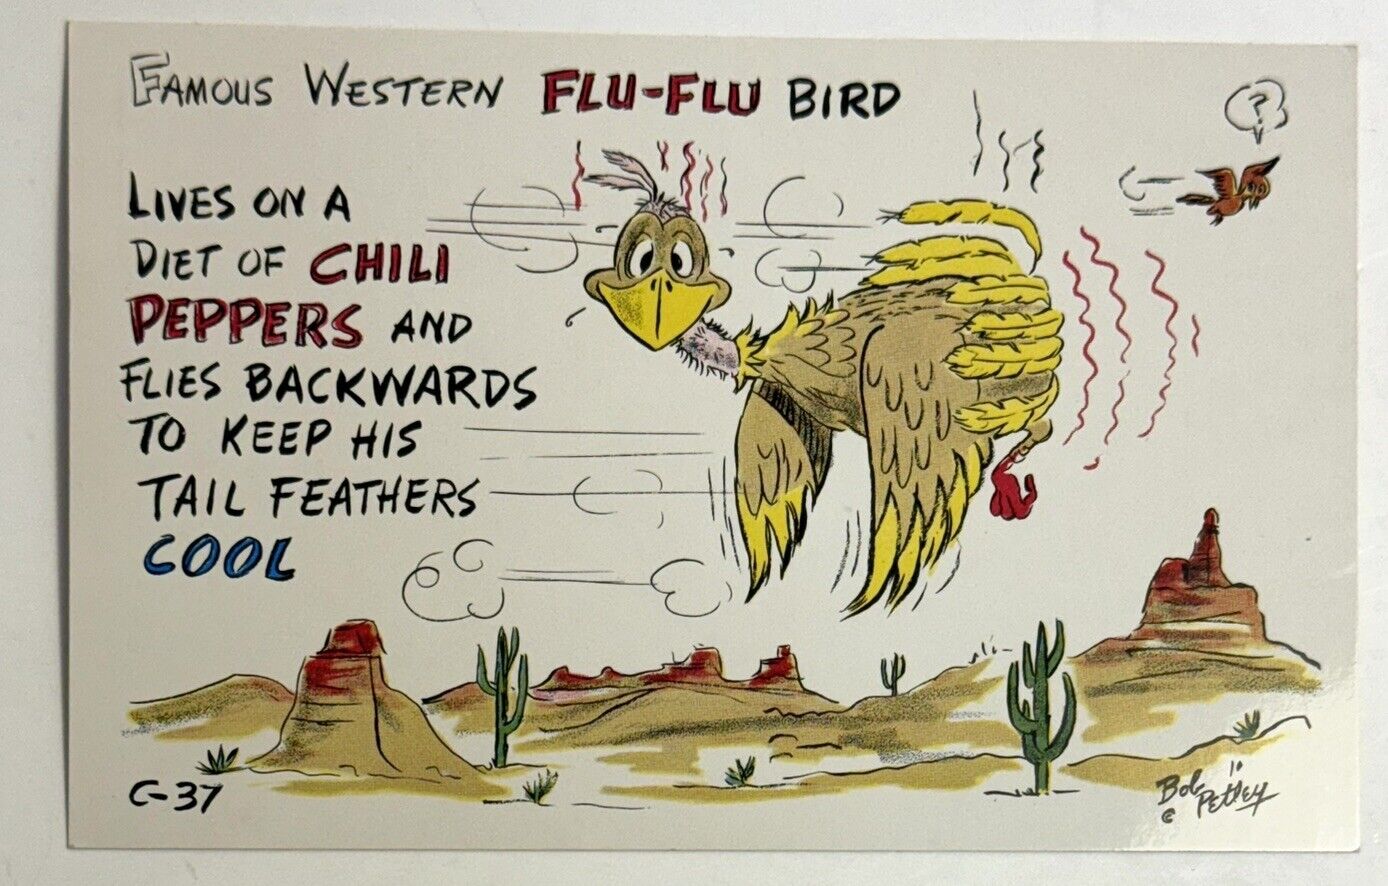 Famous Western Flu-Flu Bird Dessert Bob Petley Unposted Vintage Comic Postcard